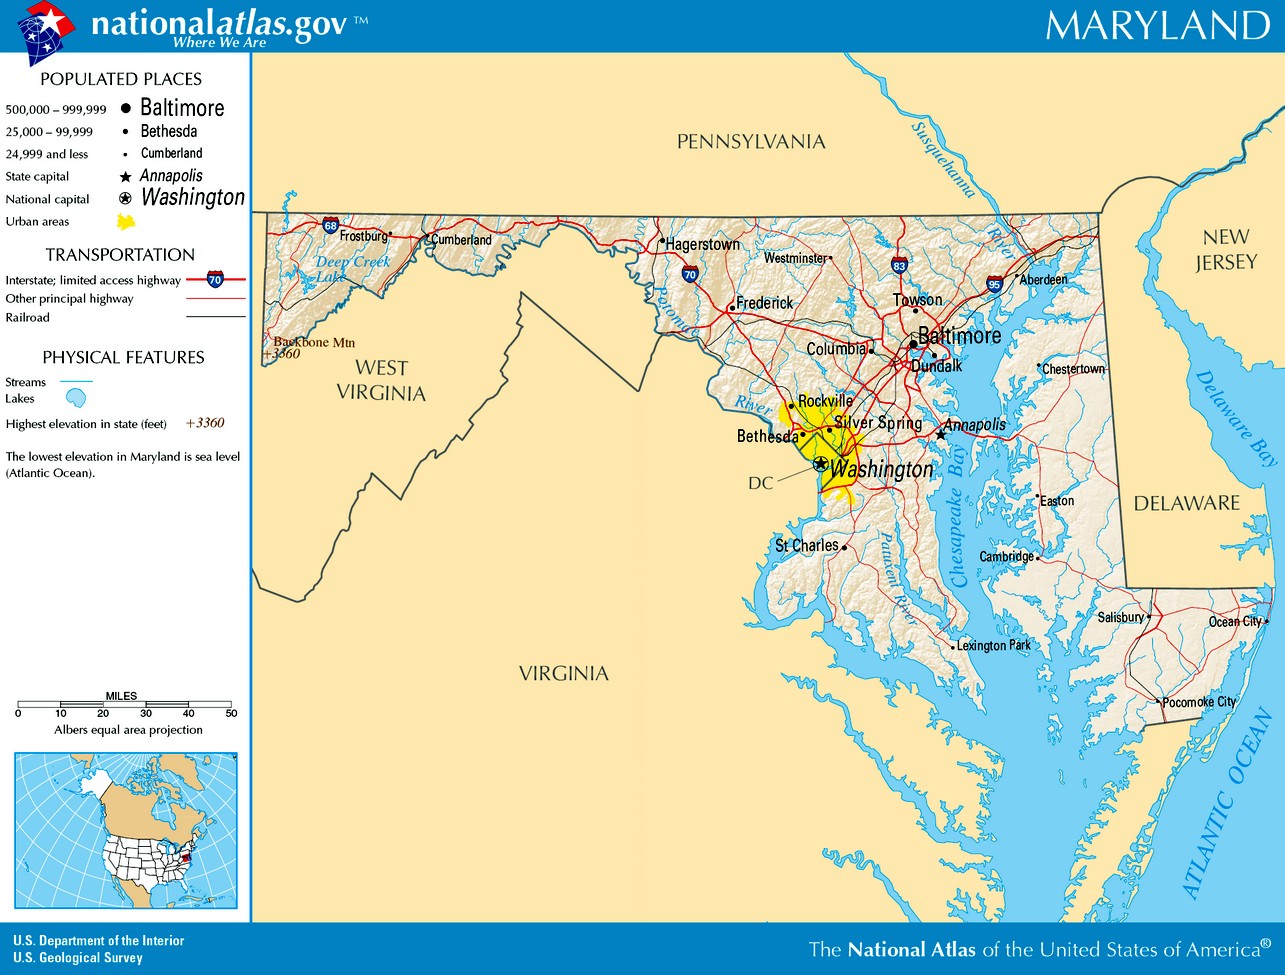 High Resolution Map of Maryland.jpg